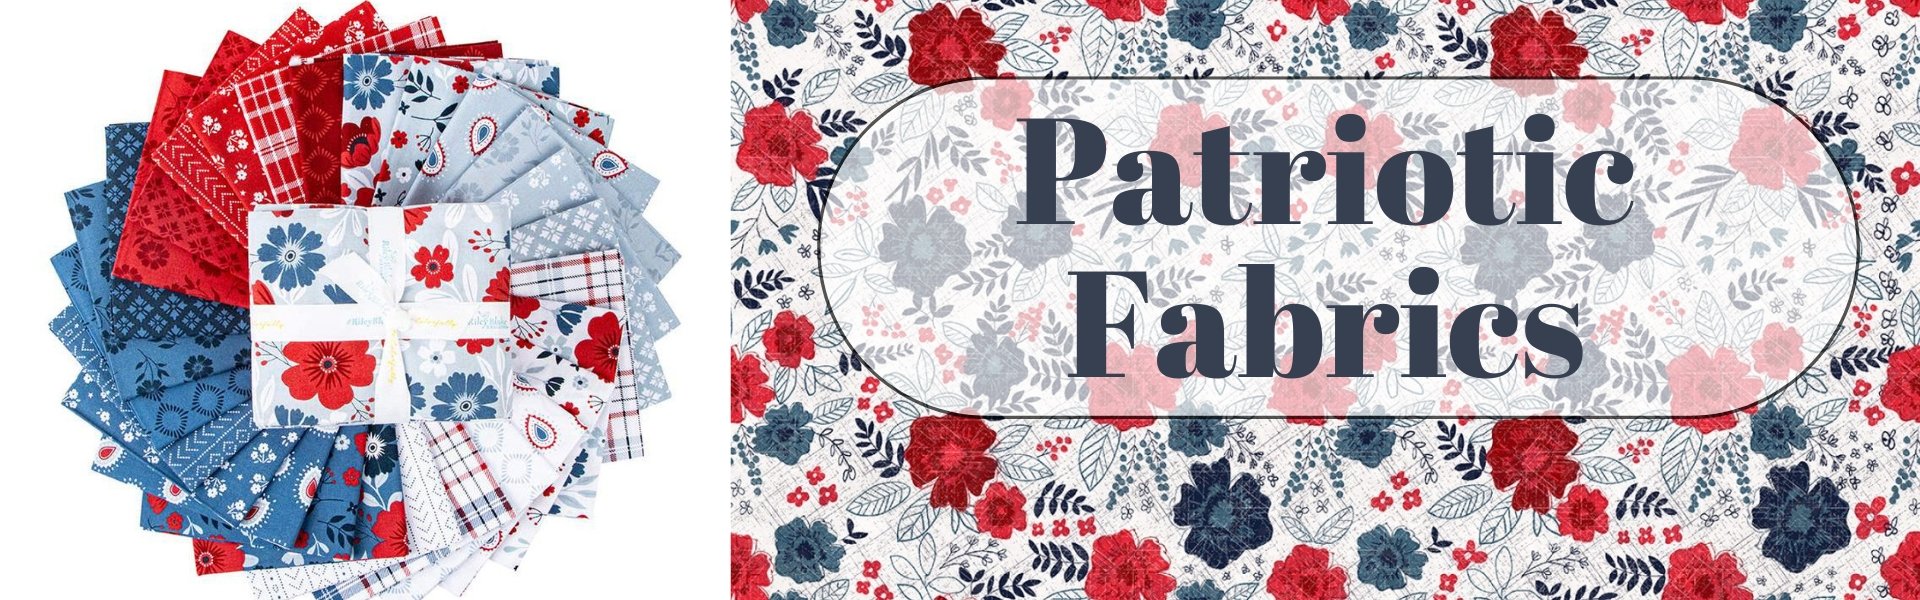 Patriotic fabric collection sale